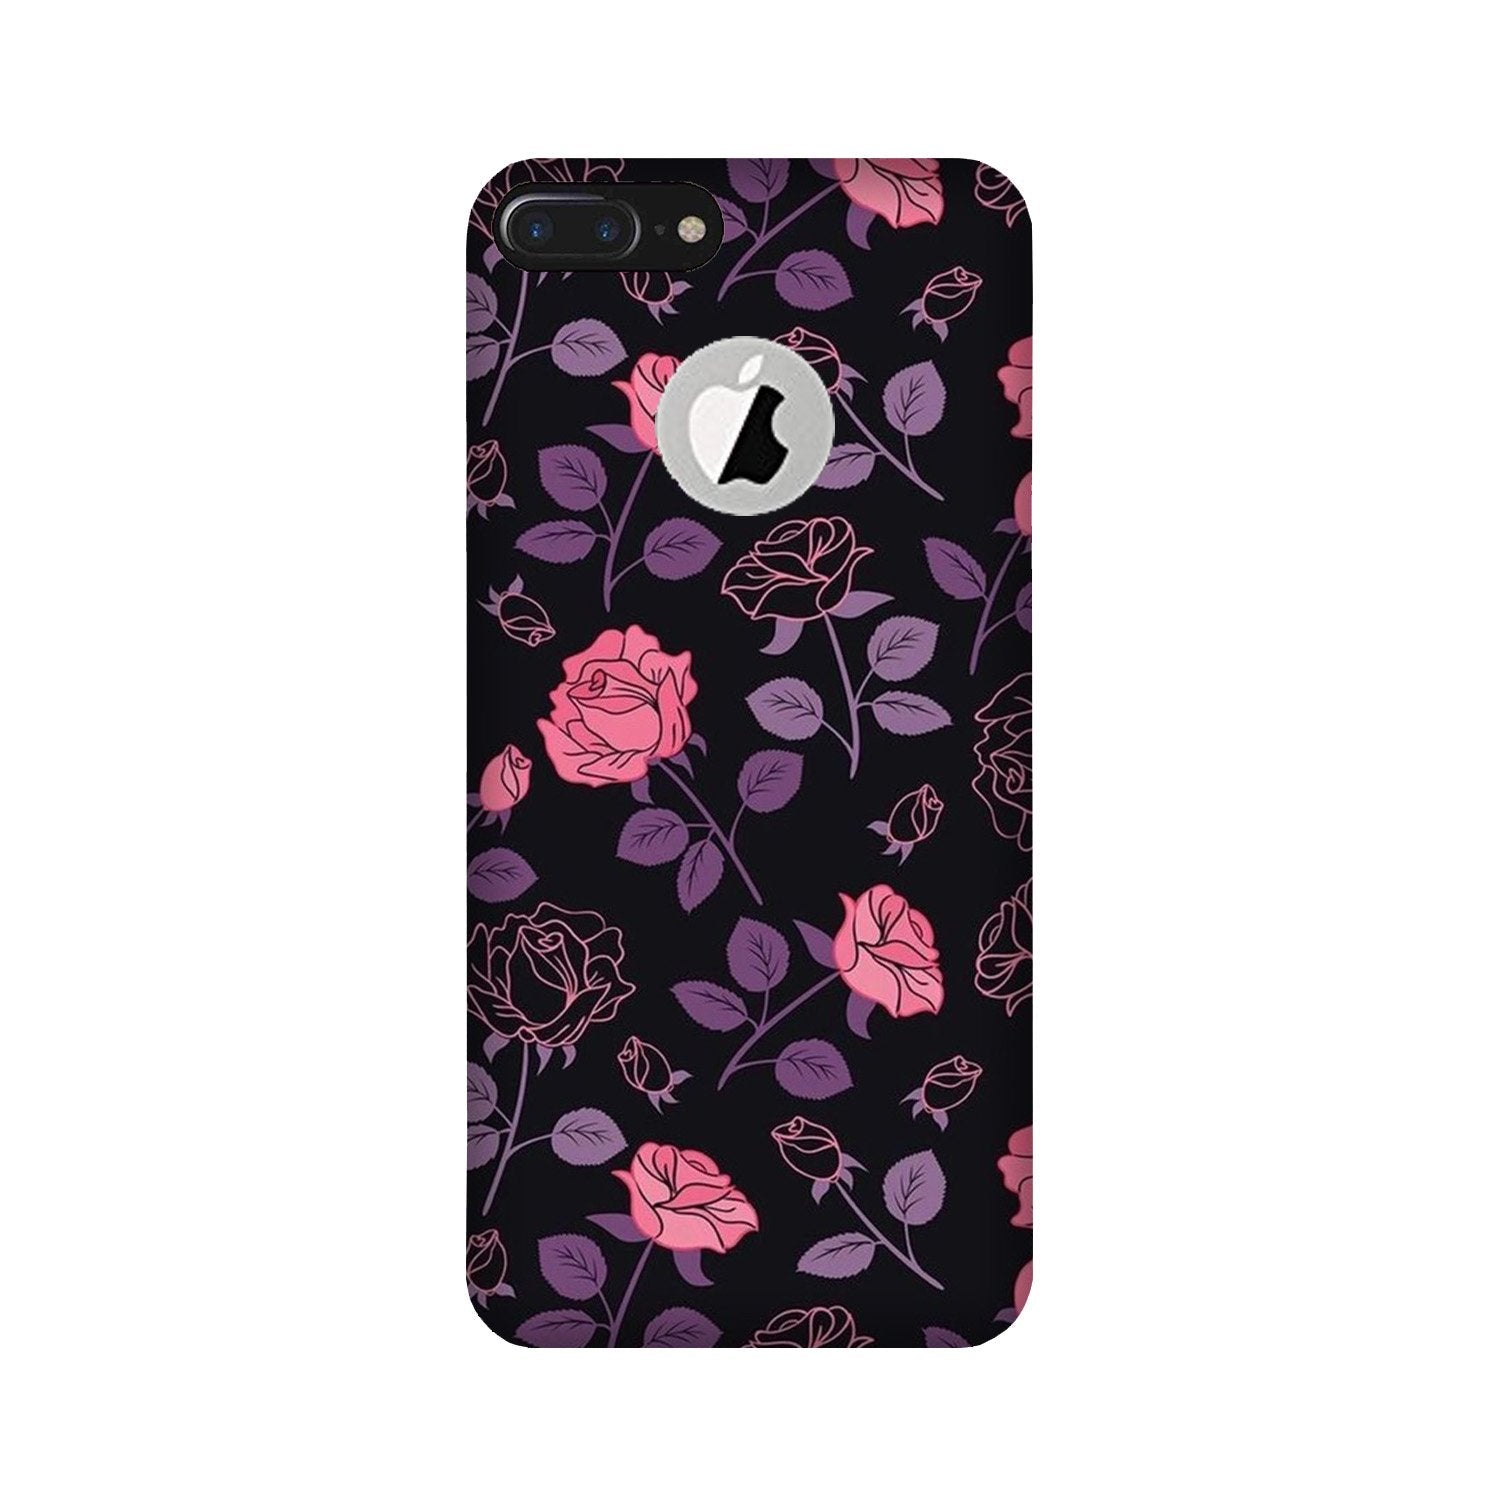 Rose Pattern Case for iPhone 7 Plus logo cut